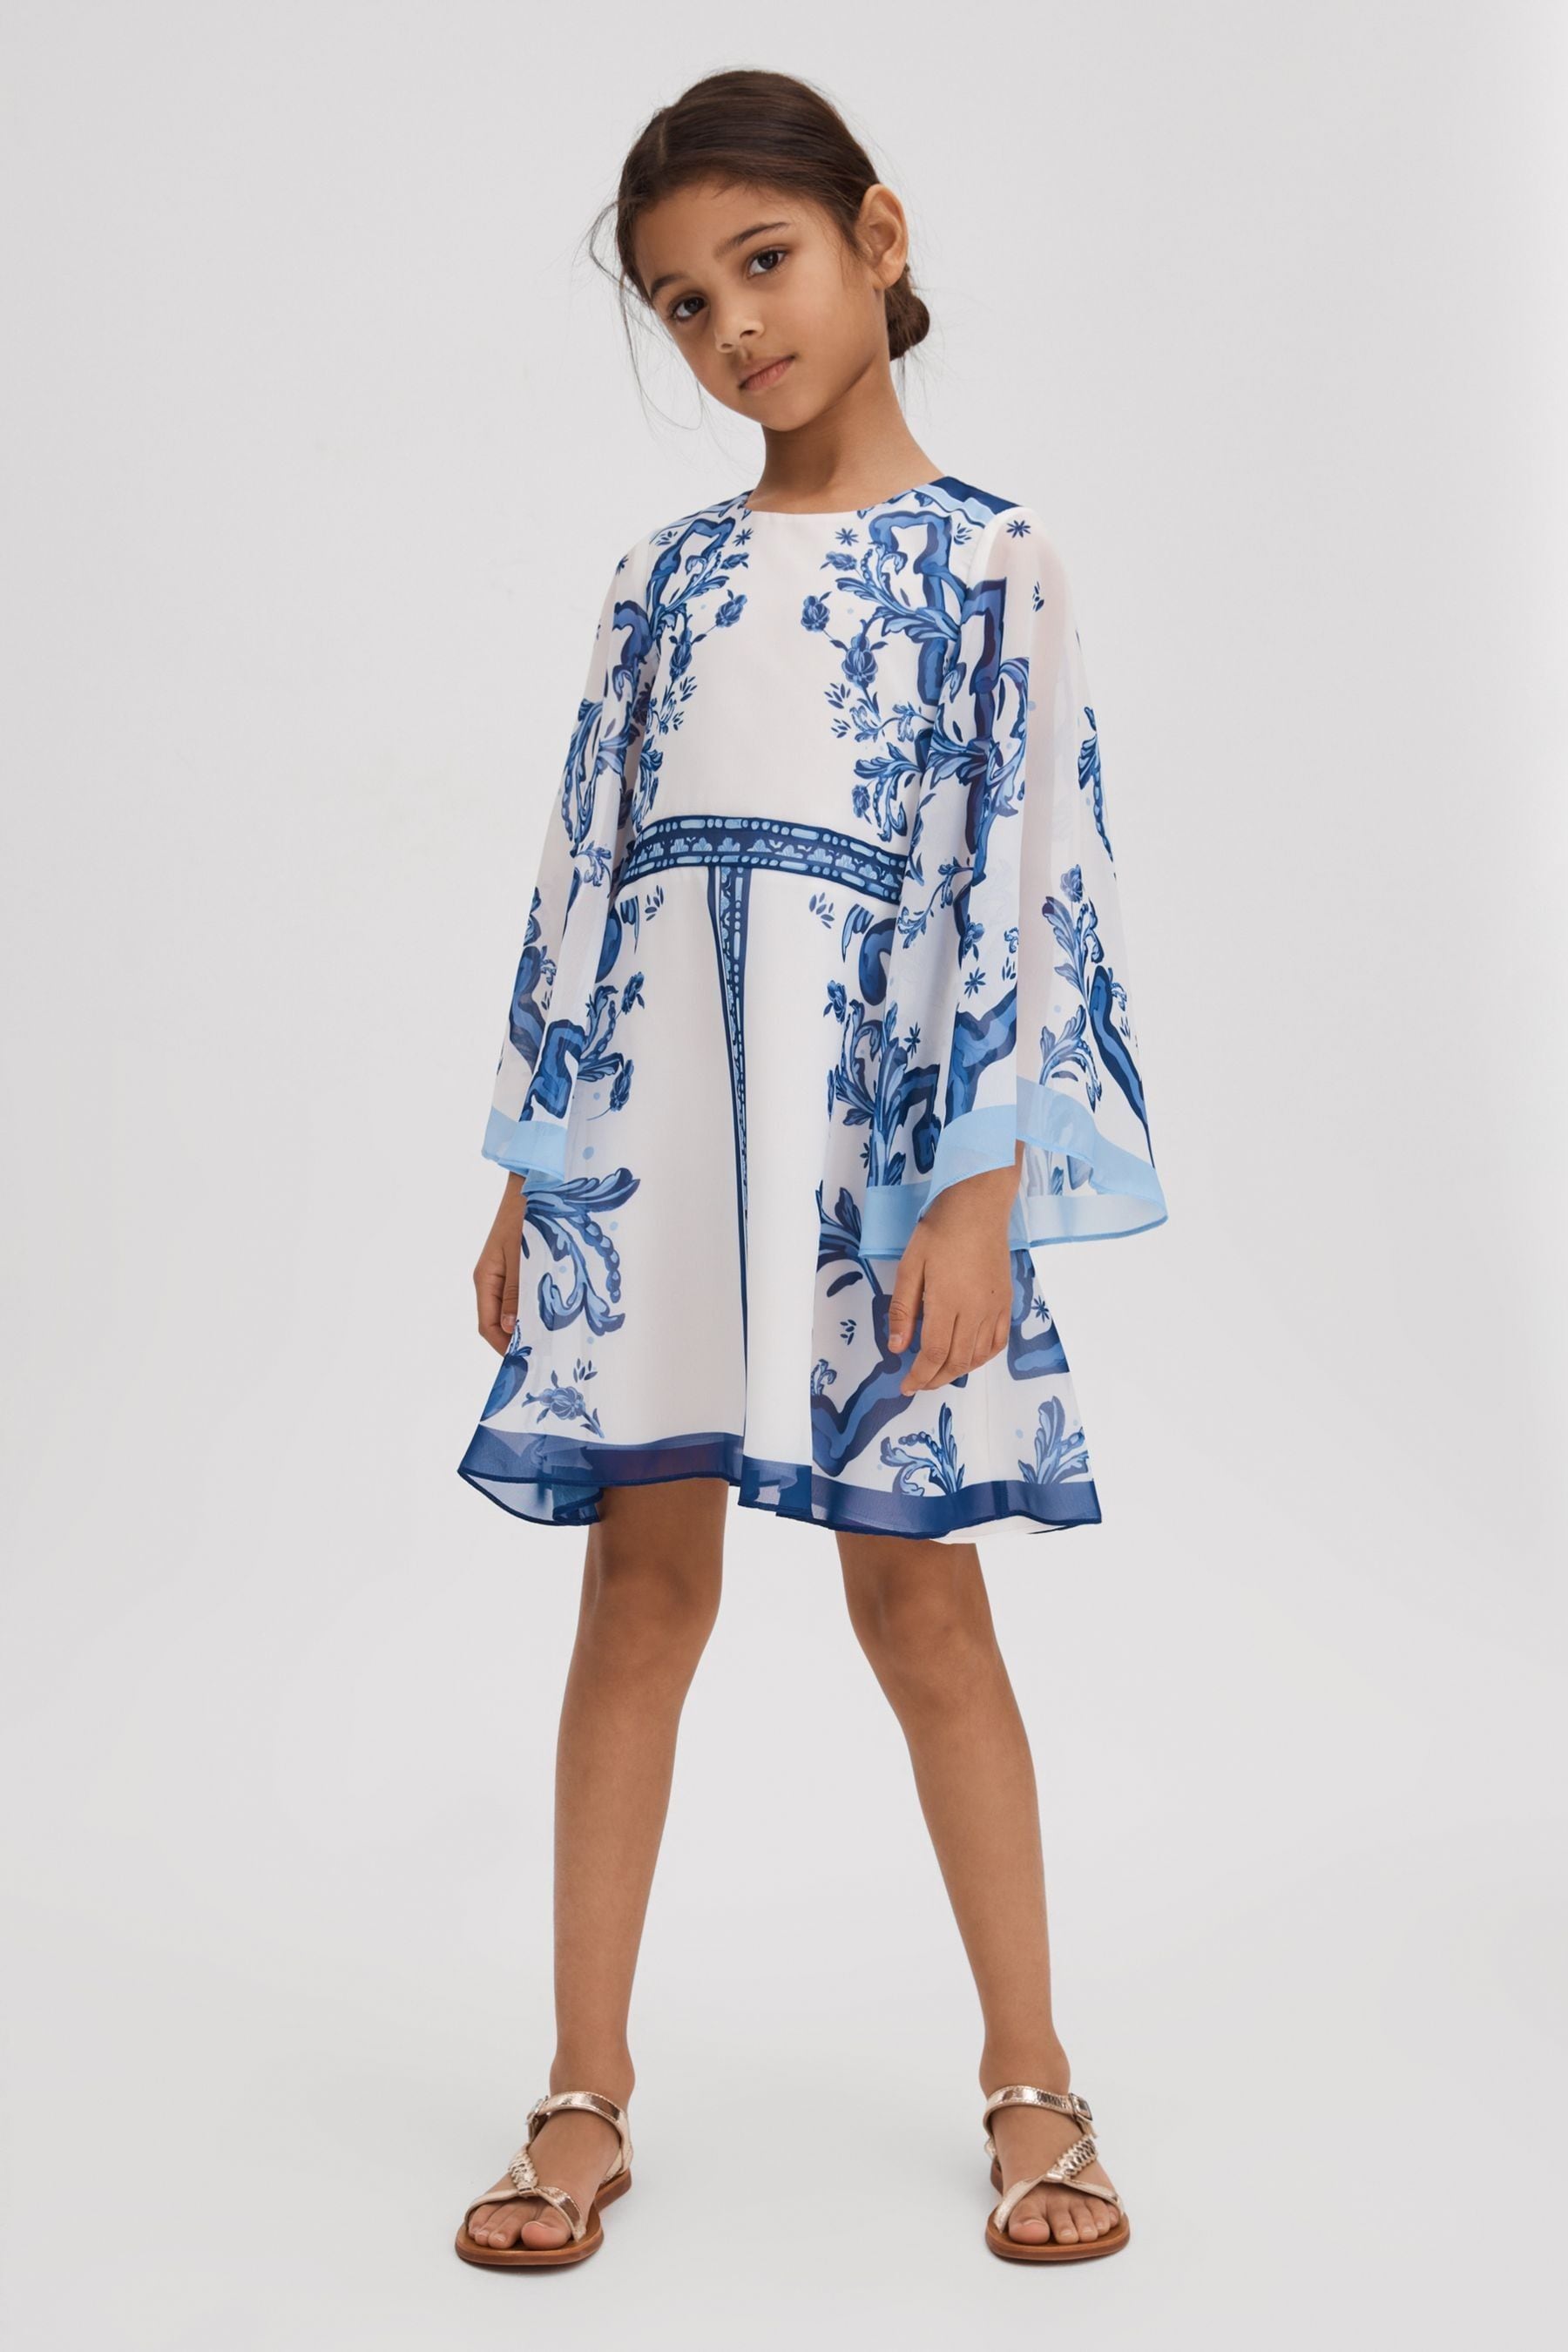 Reiss Kids' Andra - Blue Print Junior Tile Print Flare Sleeve Dress, 8